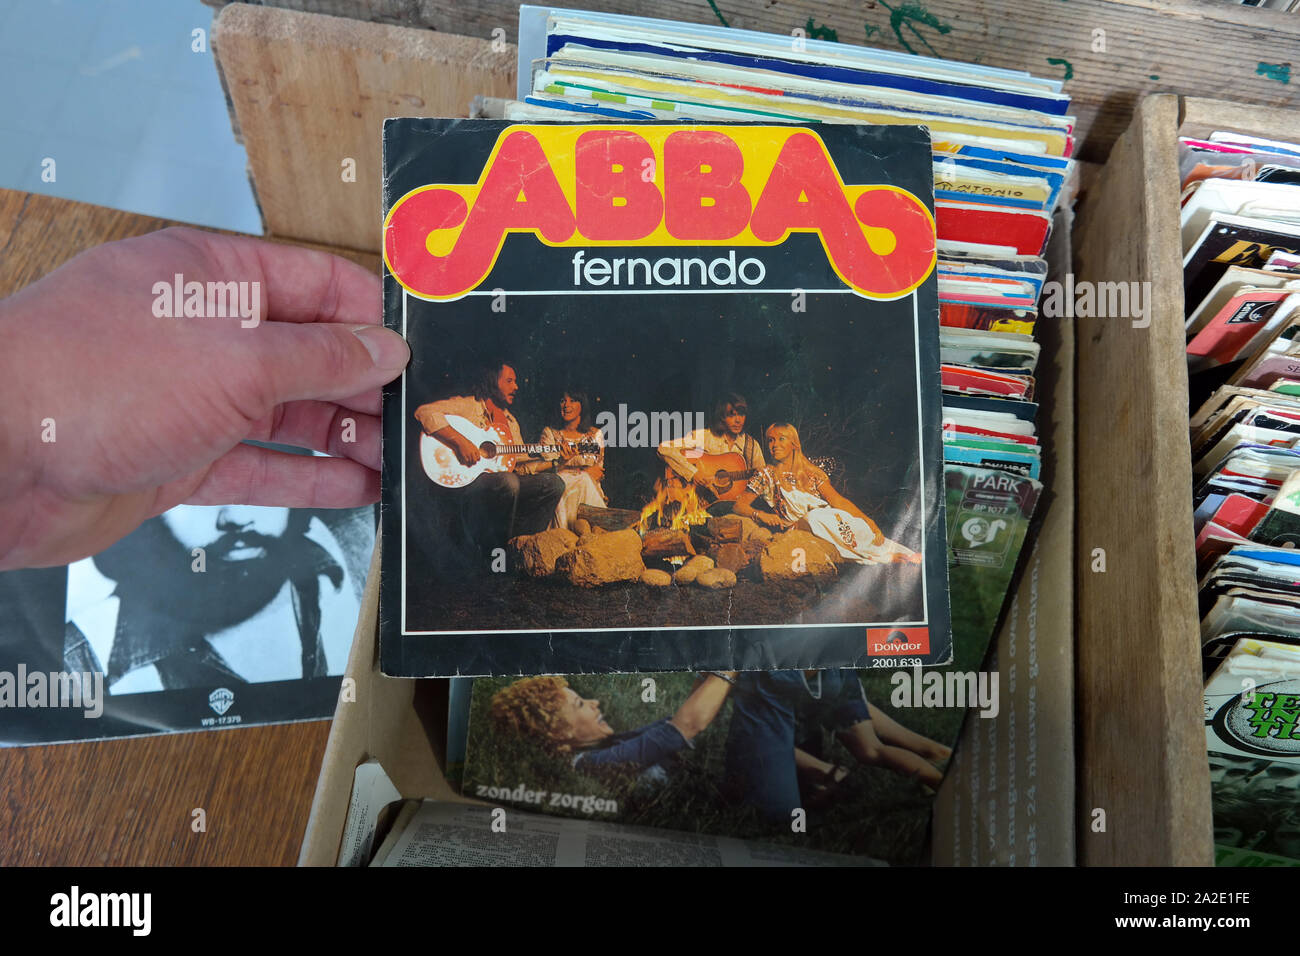 Single record: ABBA - fernando Stock Photo